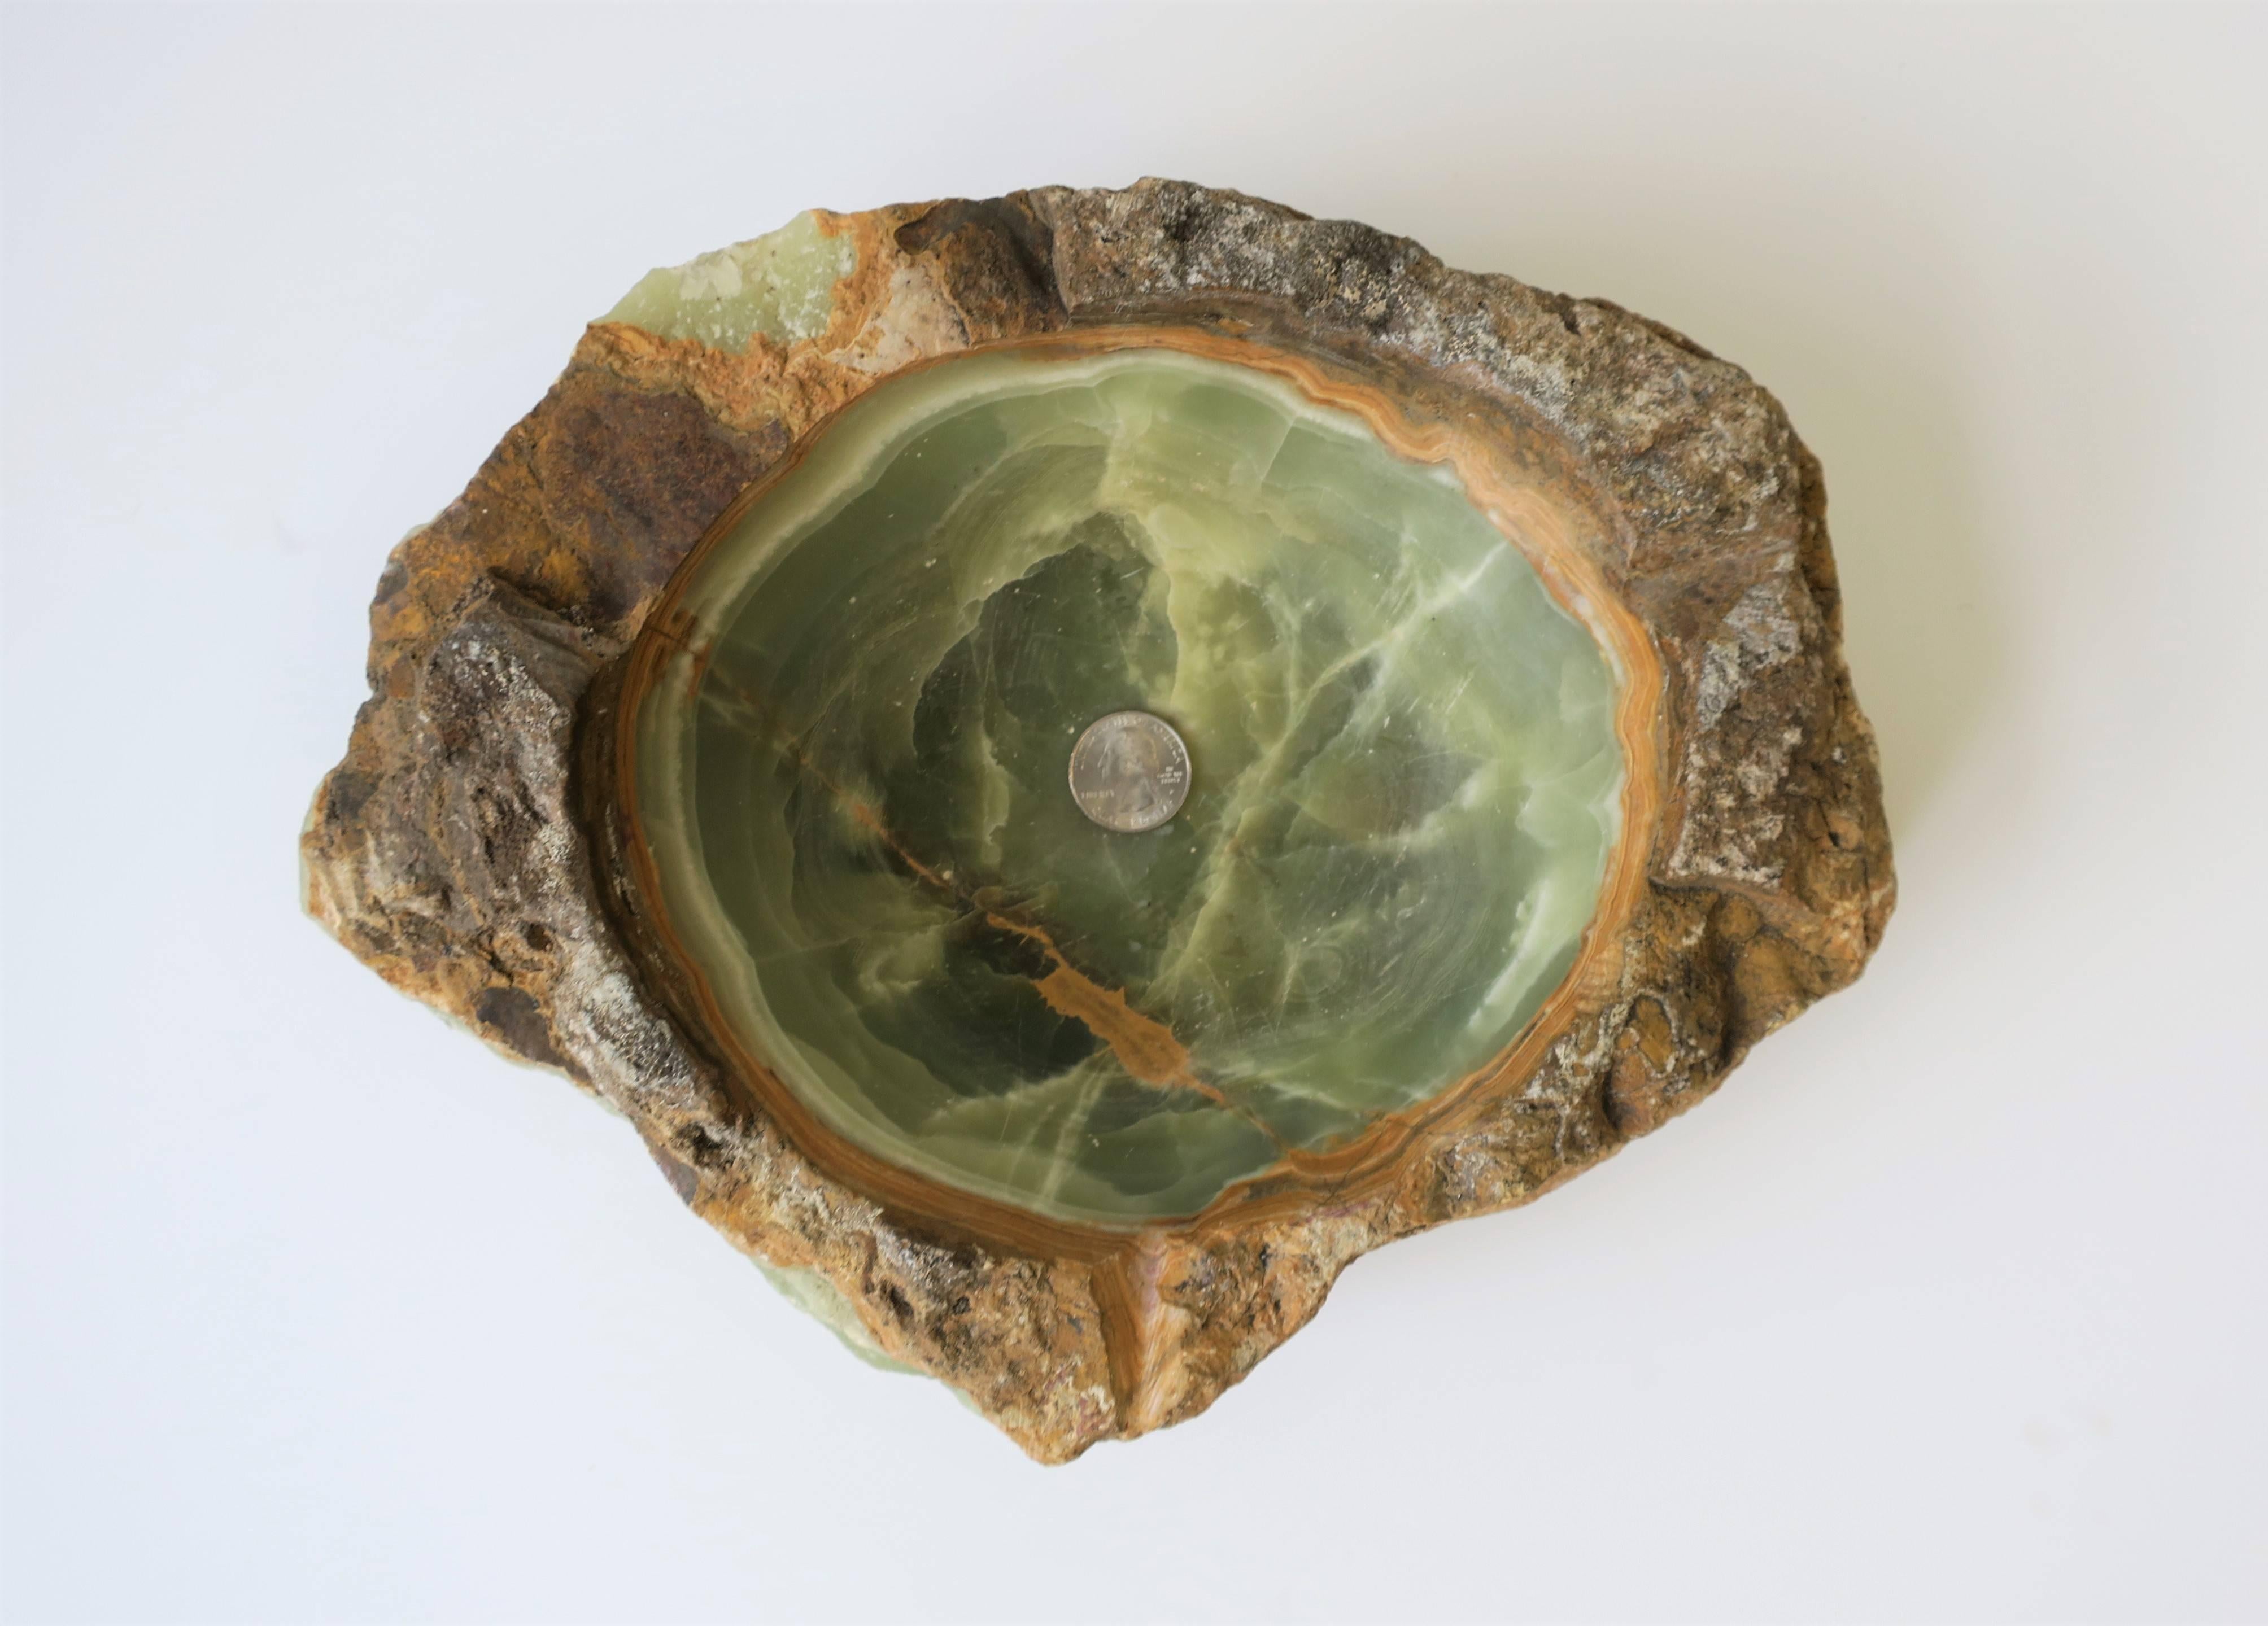 Organic Modern Onyx Marble Vessel Bowl Sculpture